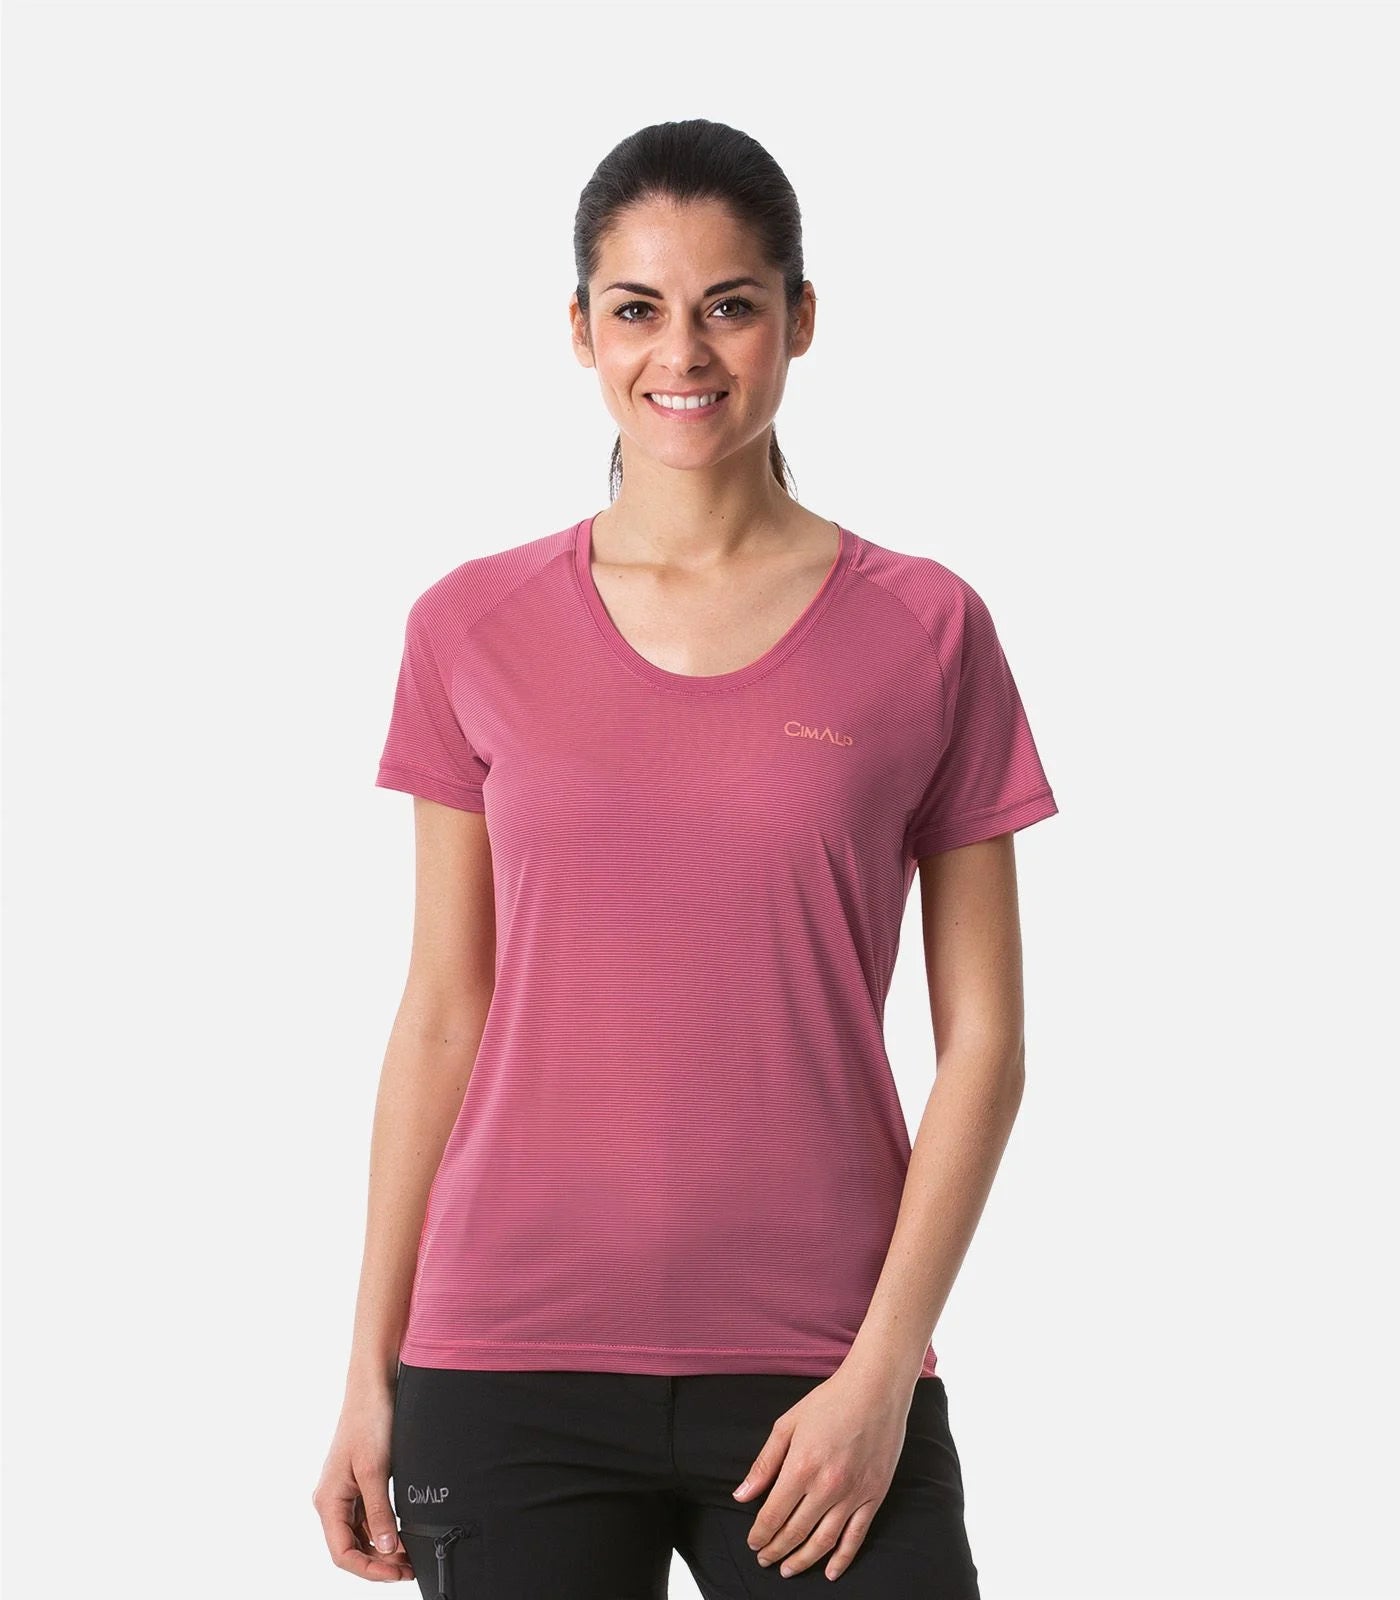 T-shirt léger et respirant ELENA rose